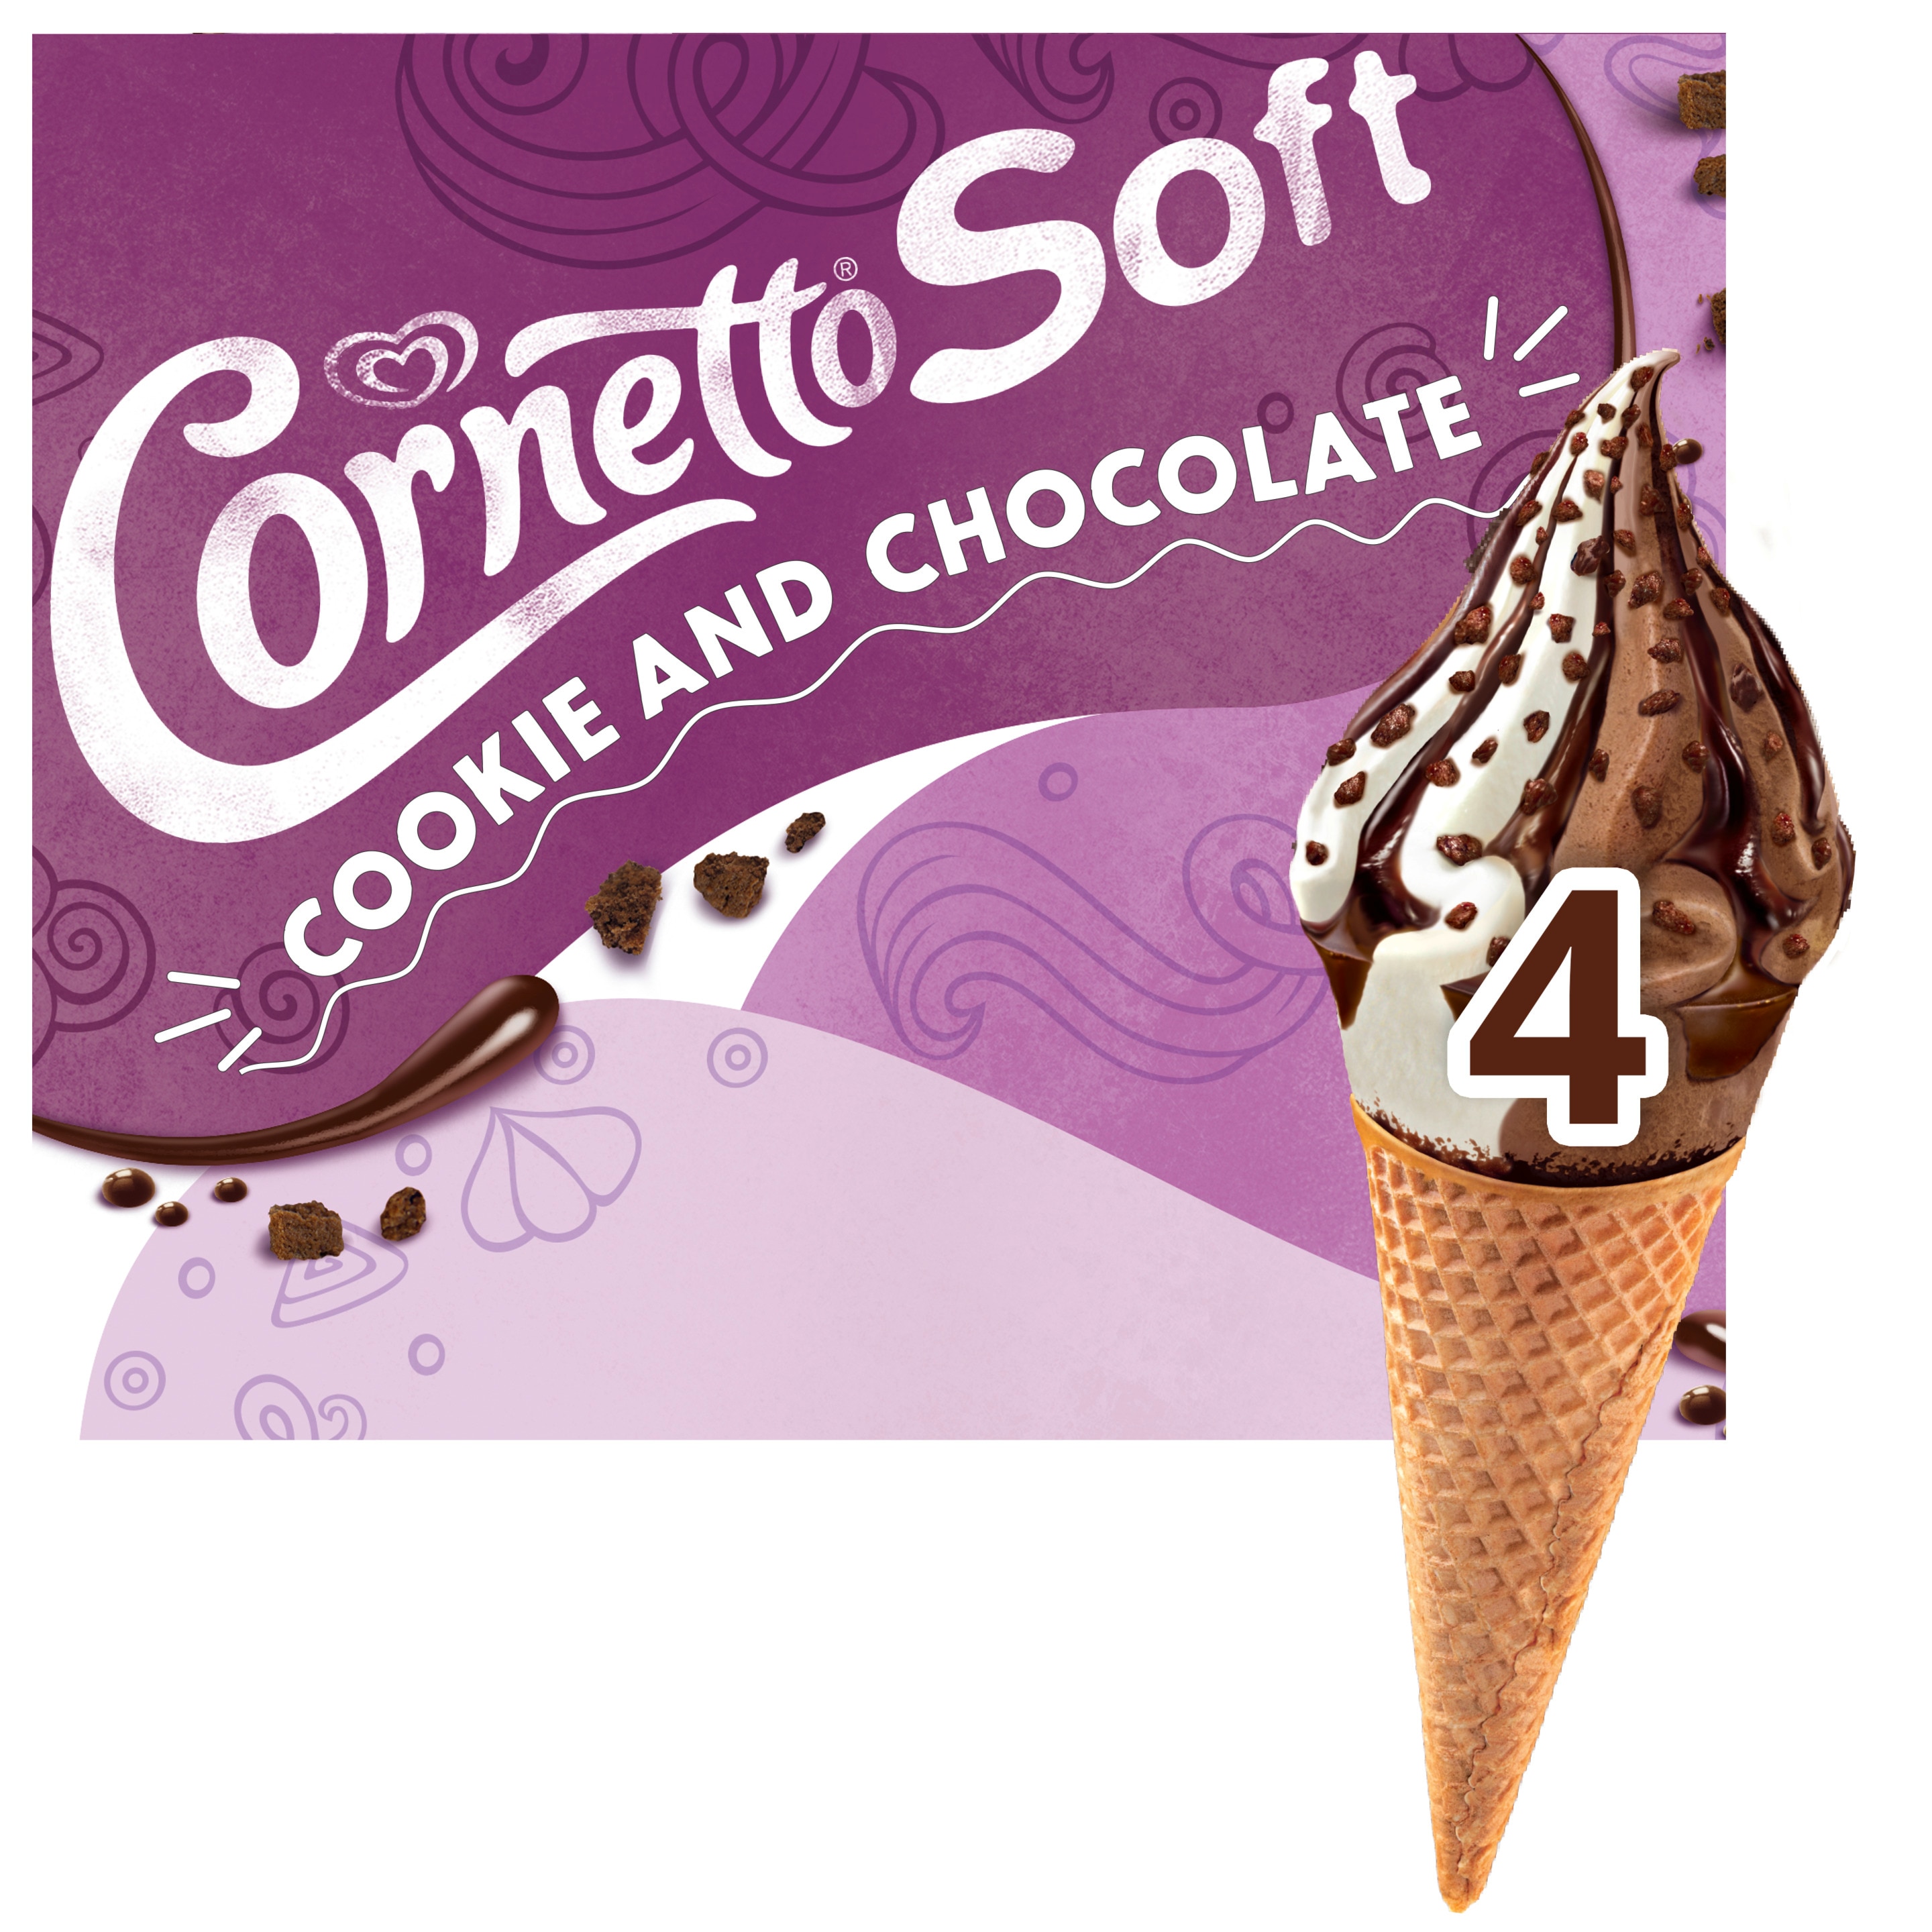 Cornetto Soft Cookies & Chocolate x4 - Langnese Deutschland